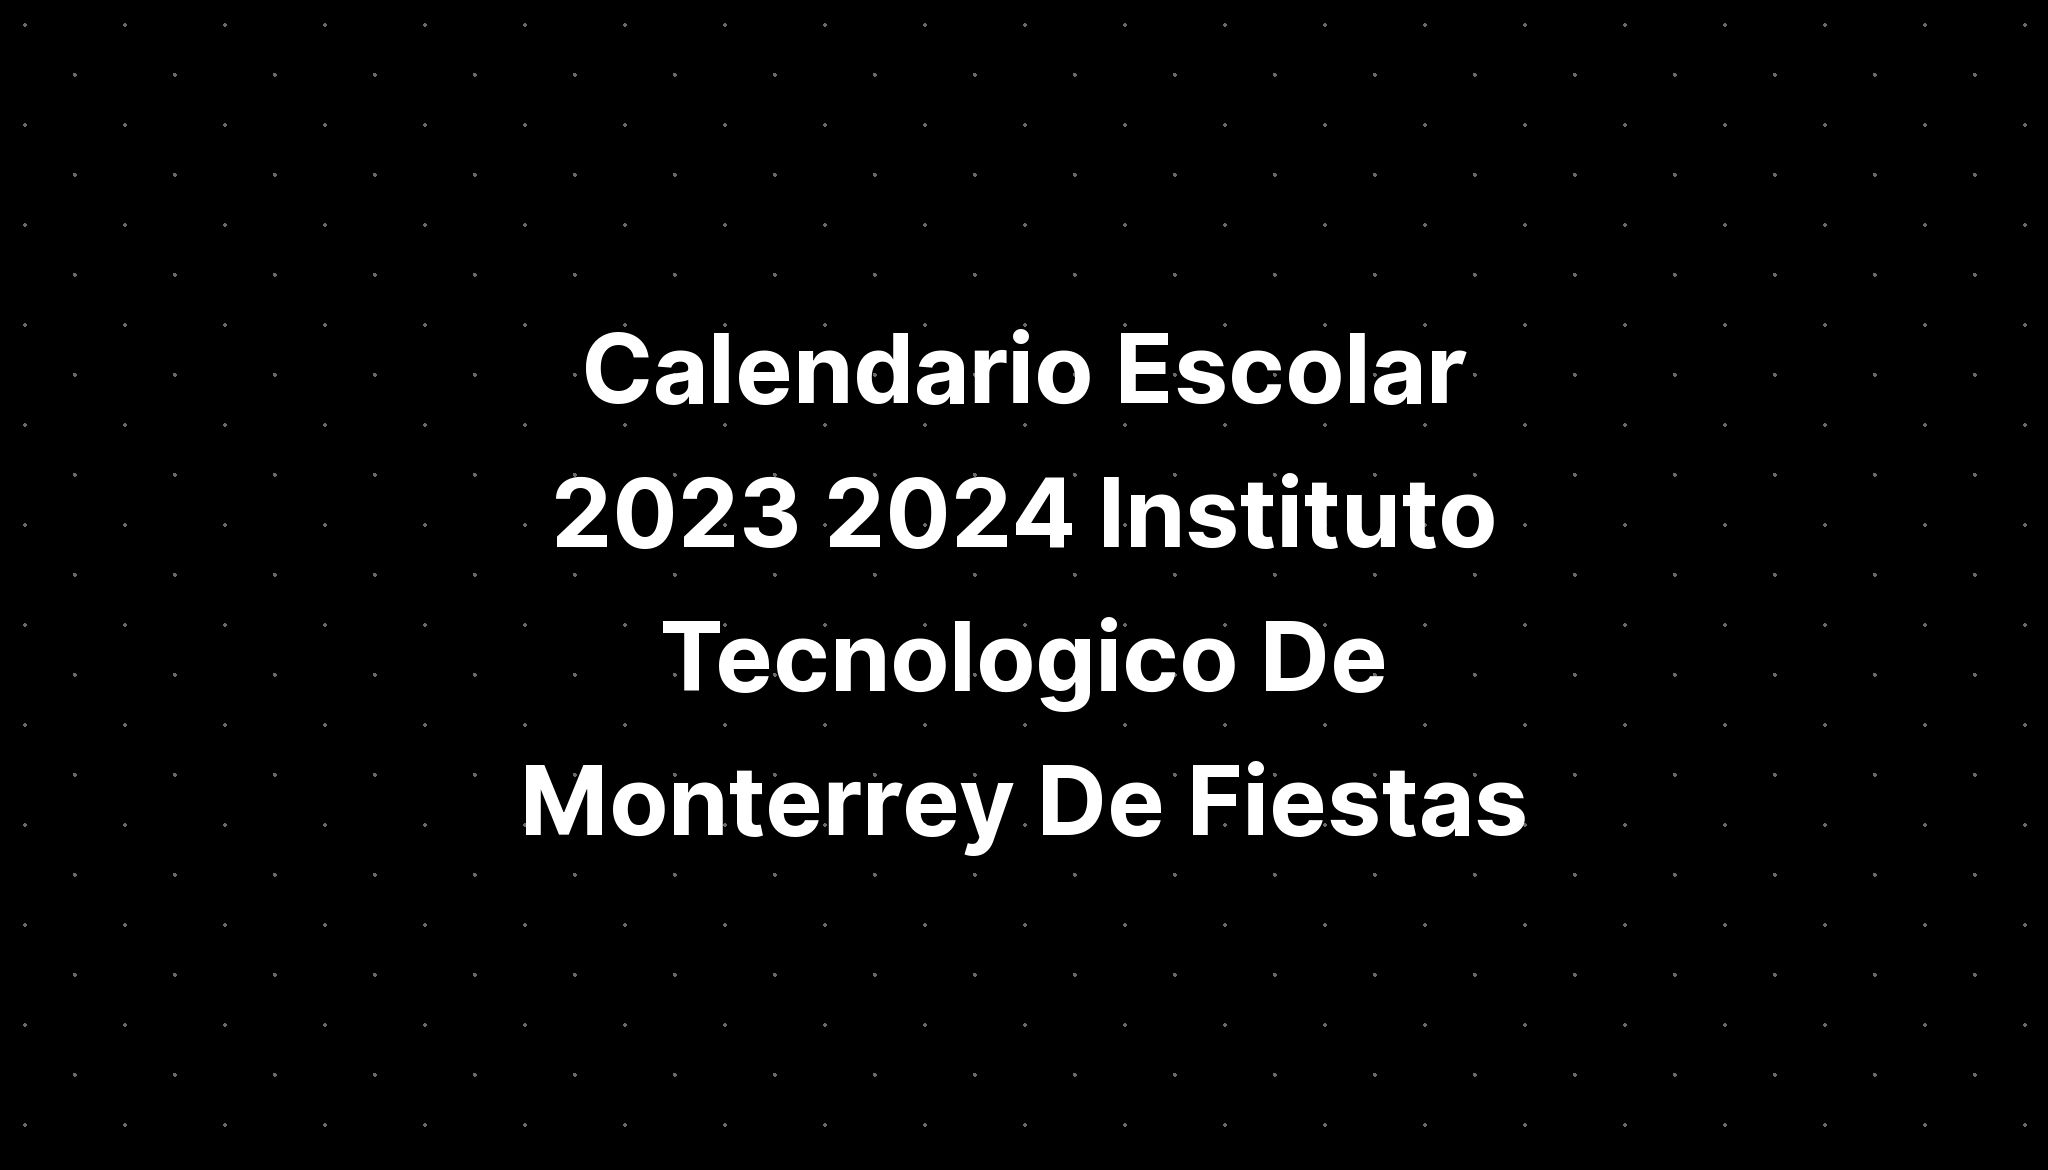 Calendario Escolar 2023 2024 Instituto Tecnologico De Monterrey De